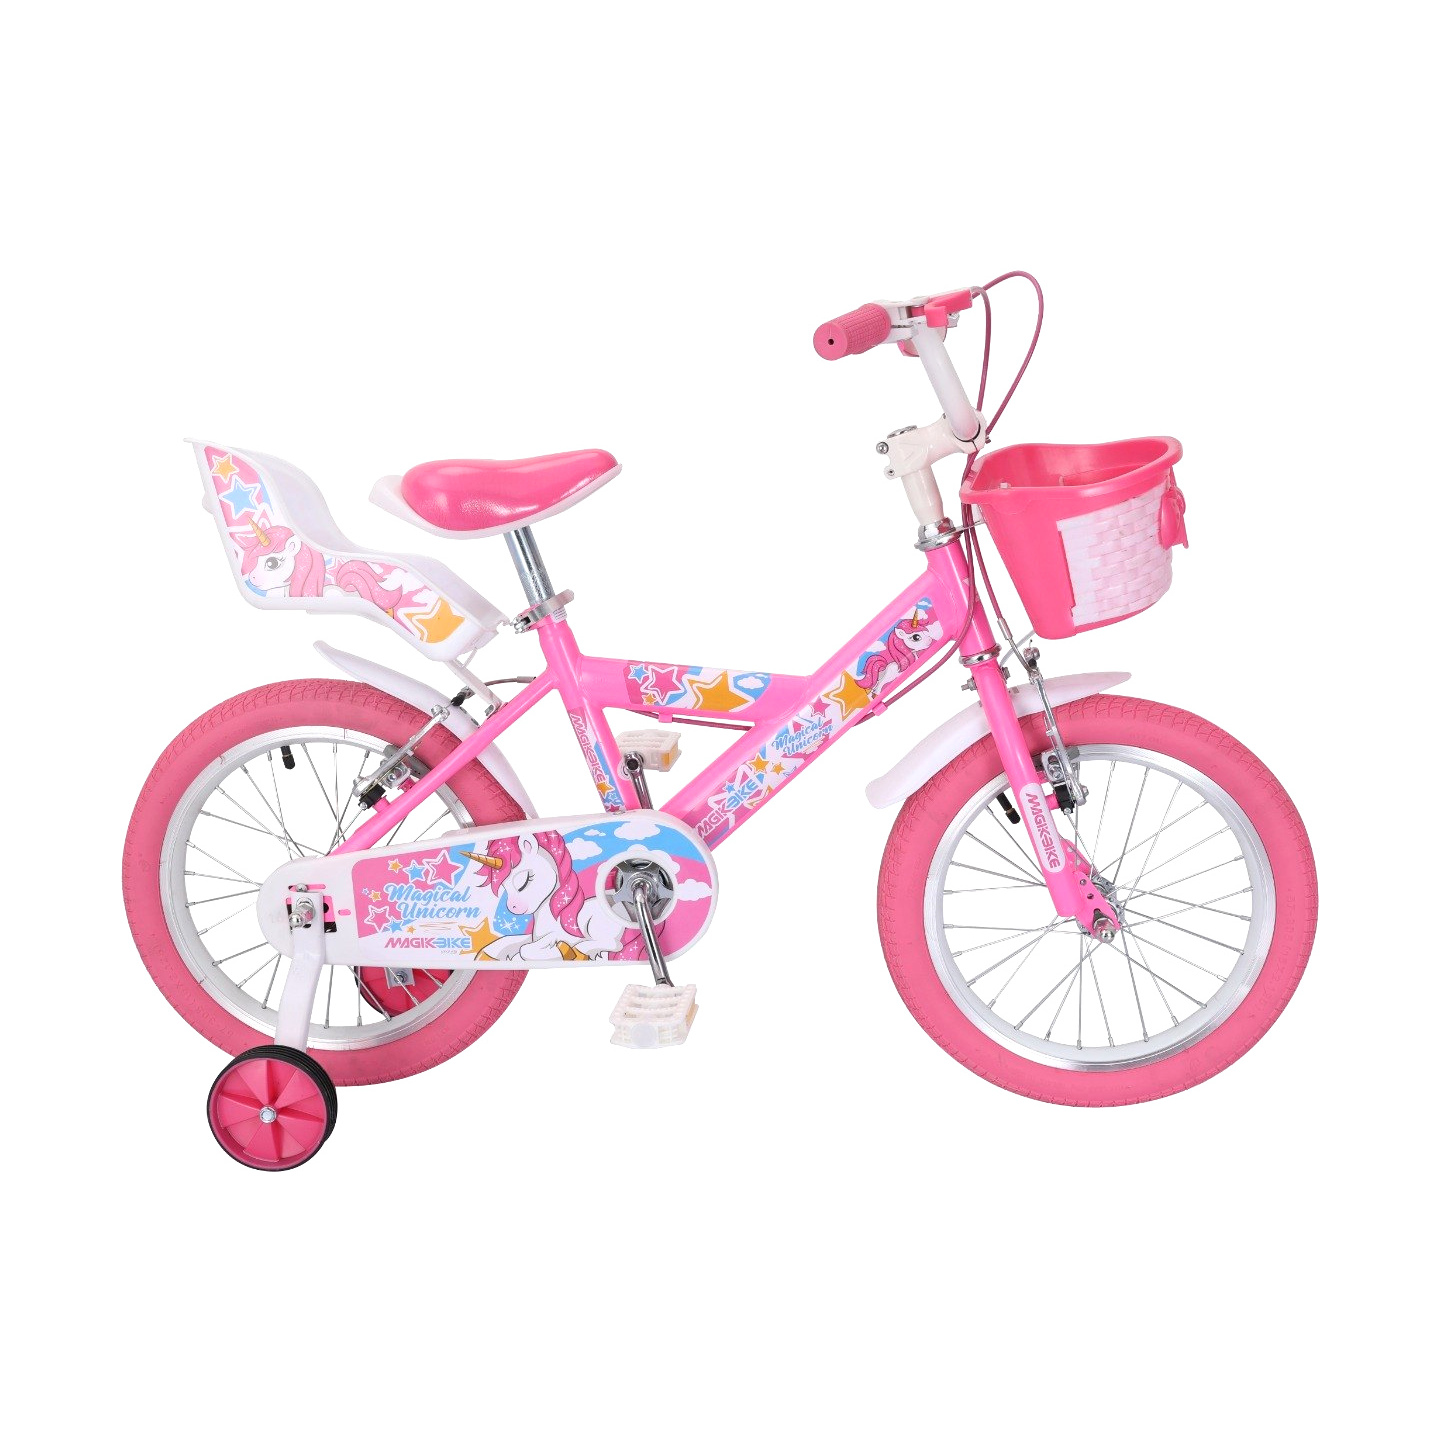 Bicicleta Niños 14 Pulgadas Magikbike Unicorn 4-6 Años - rosa - 